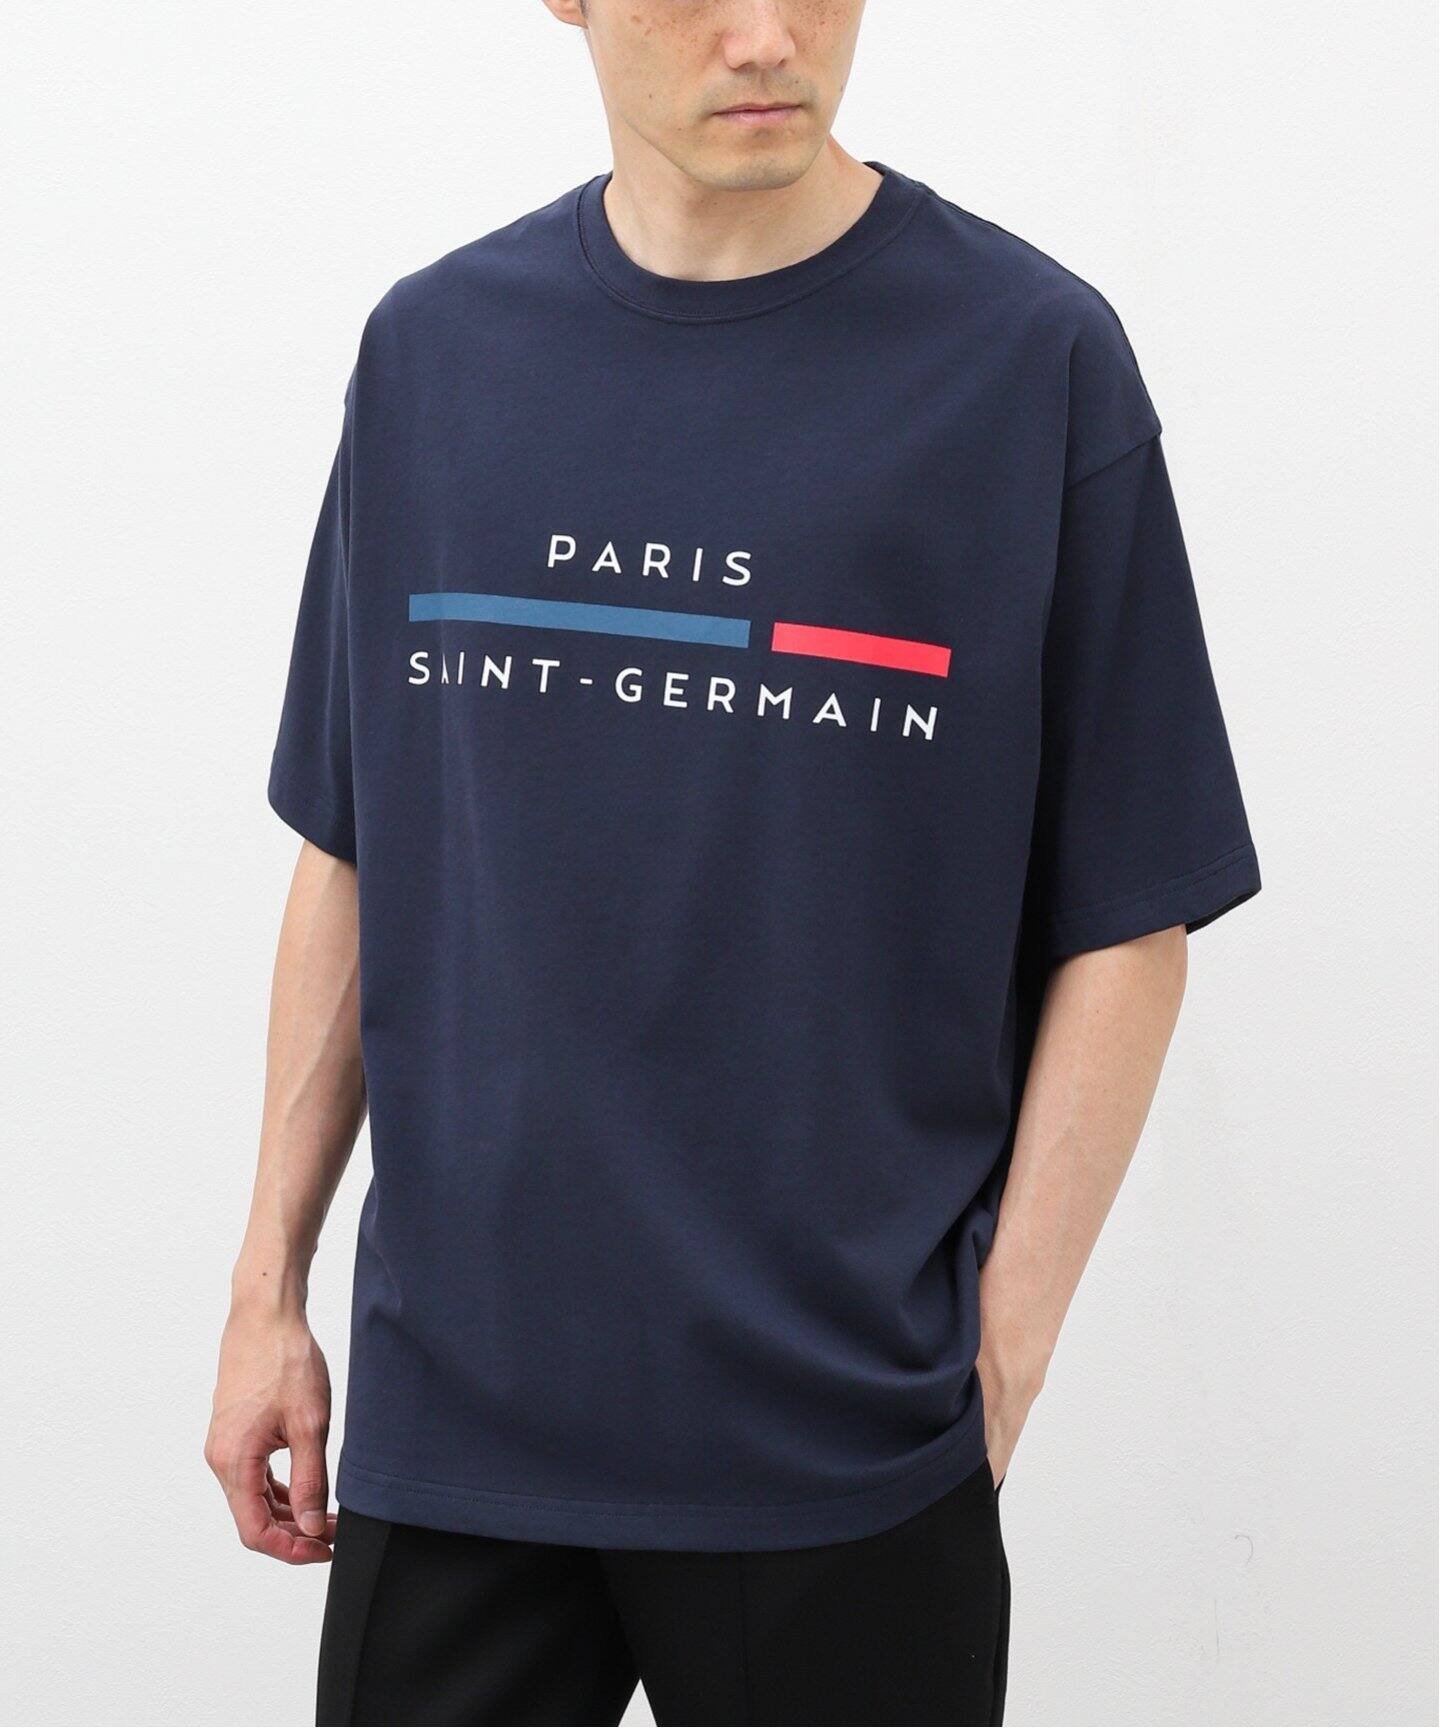 Paris Saint-Germain ROUGE ET BLEU プリント Tシャツ エディフィス トップス カットソー・Tシャツ ネイビー ホワイト